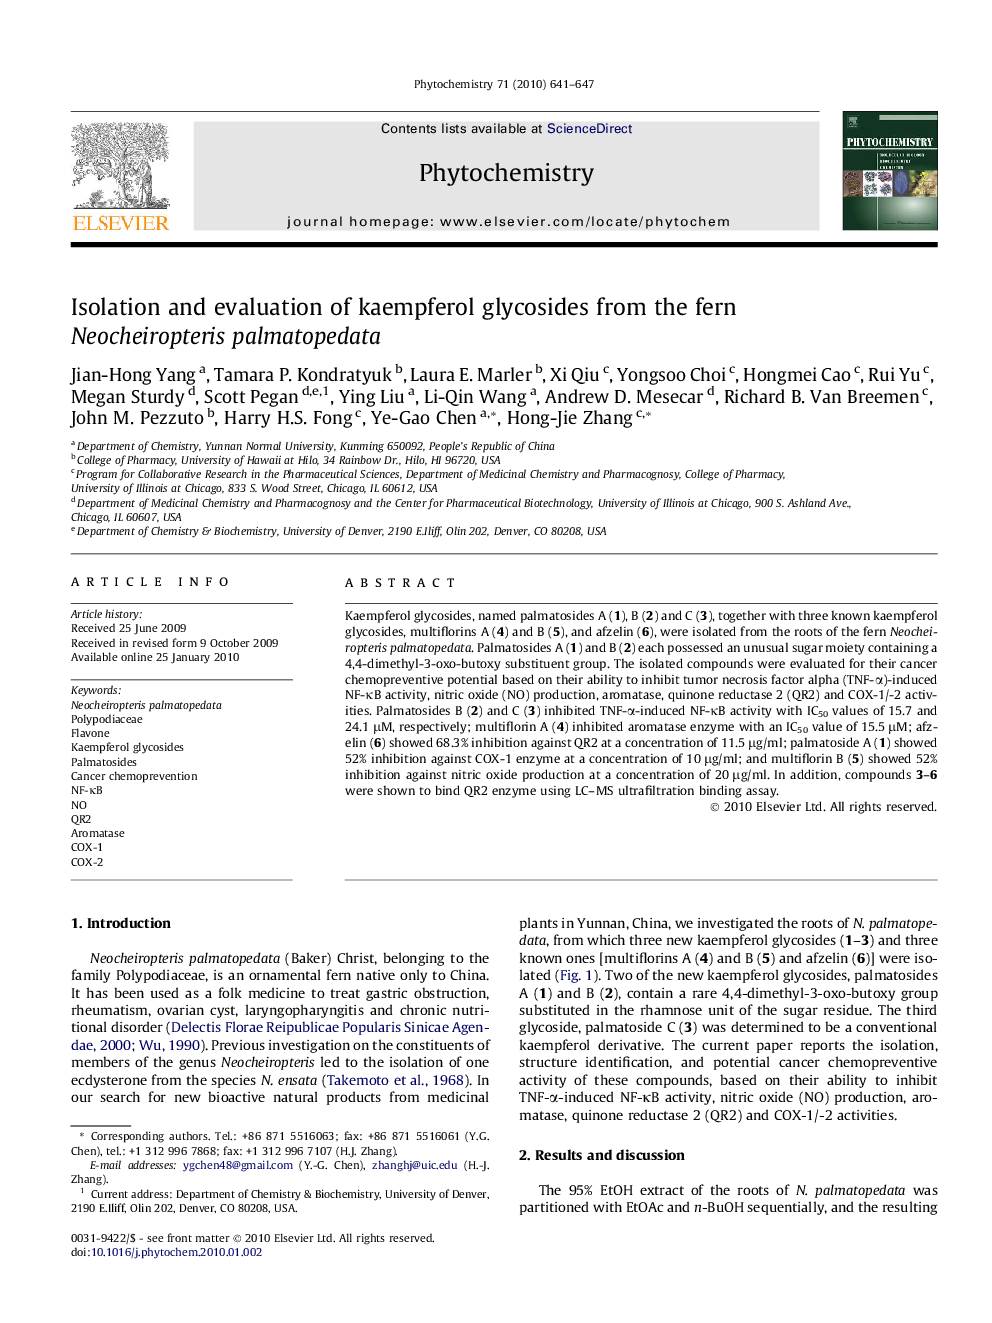 Isolation and evaluation of kaempferol glycosides from the fern Neocheiropteris palmatopedata